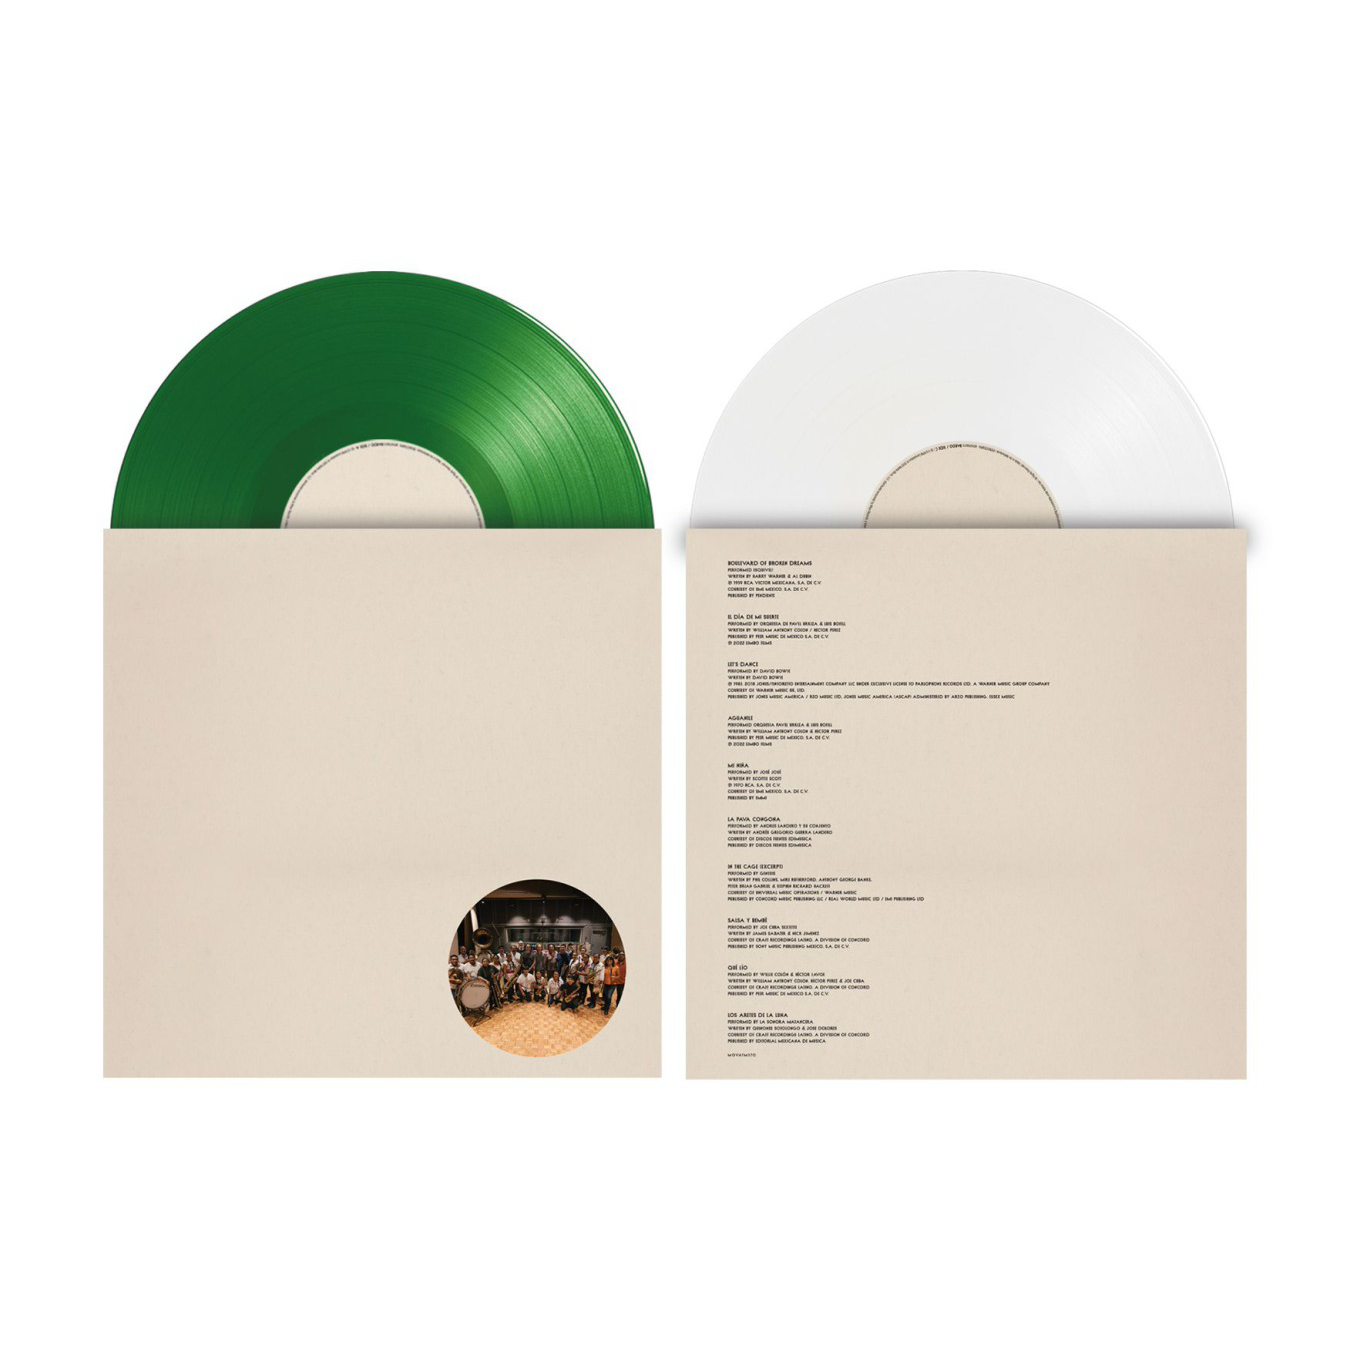 Bryce Dessner (The National) - Bardo (Original Soundtrack): Limited Green + White Vinyl 2LP